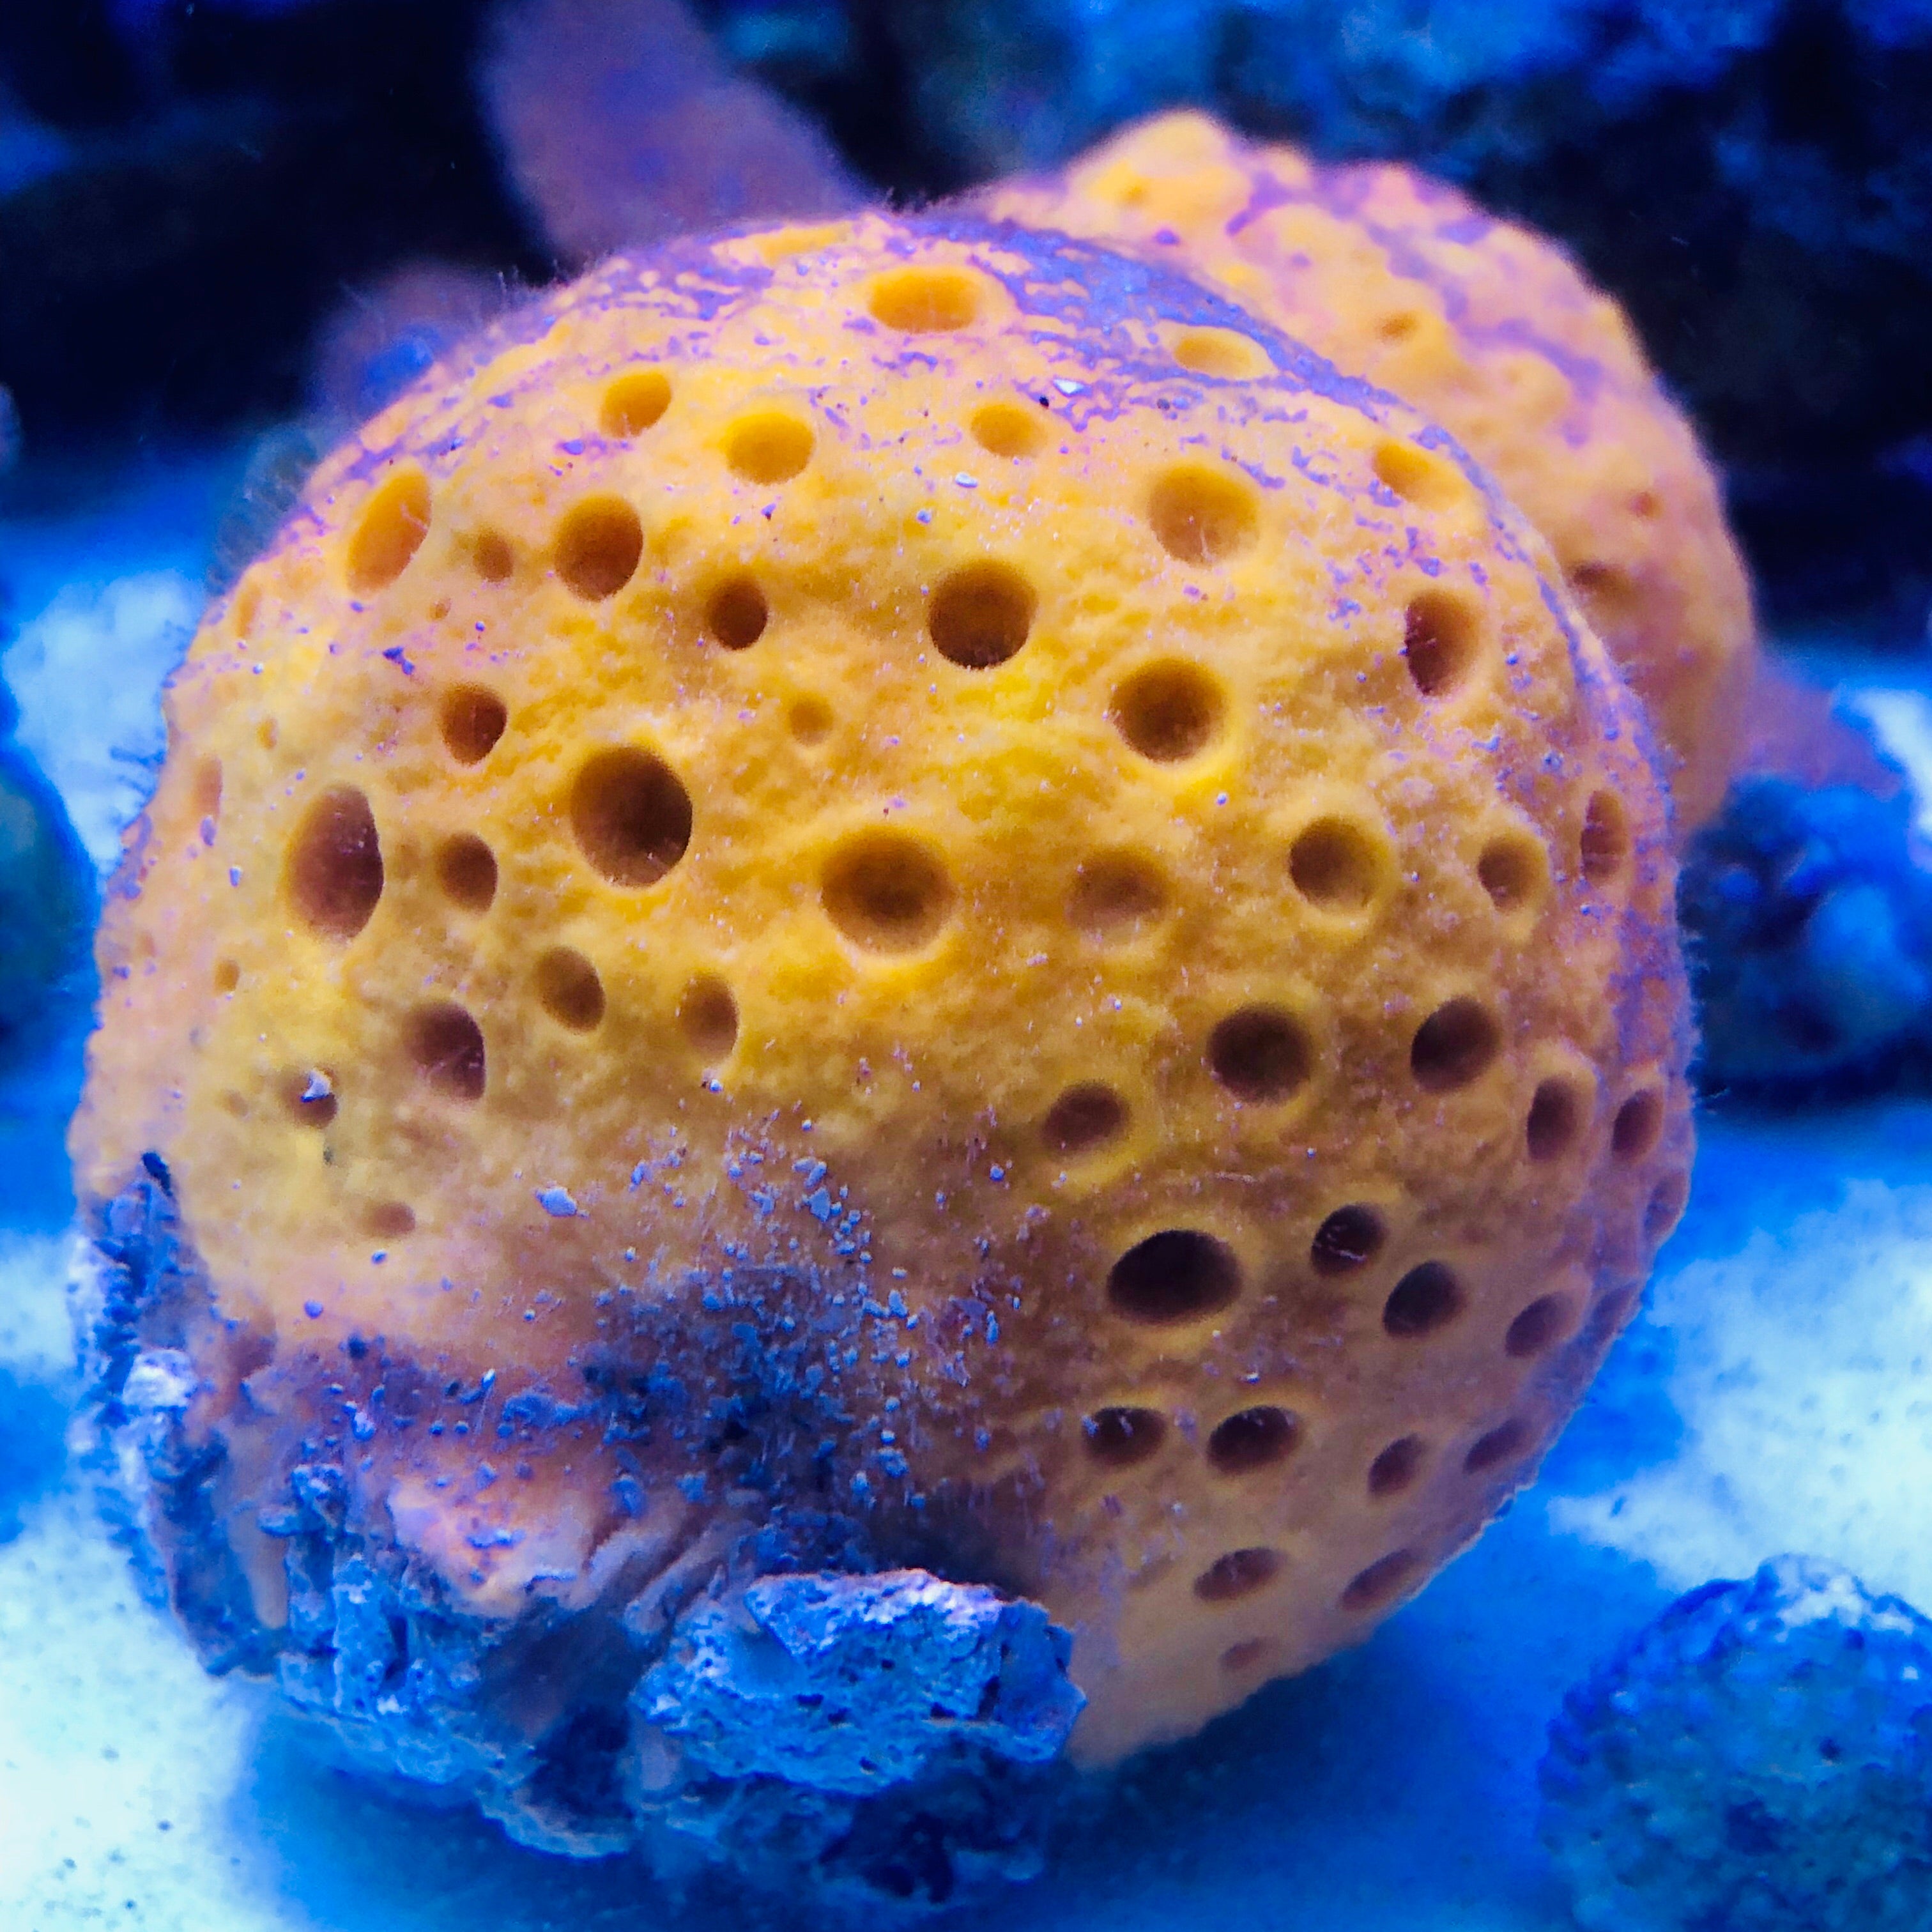 Yellow Ball Sponge – Alyssa's Seahorse Savvy